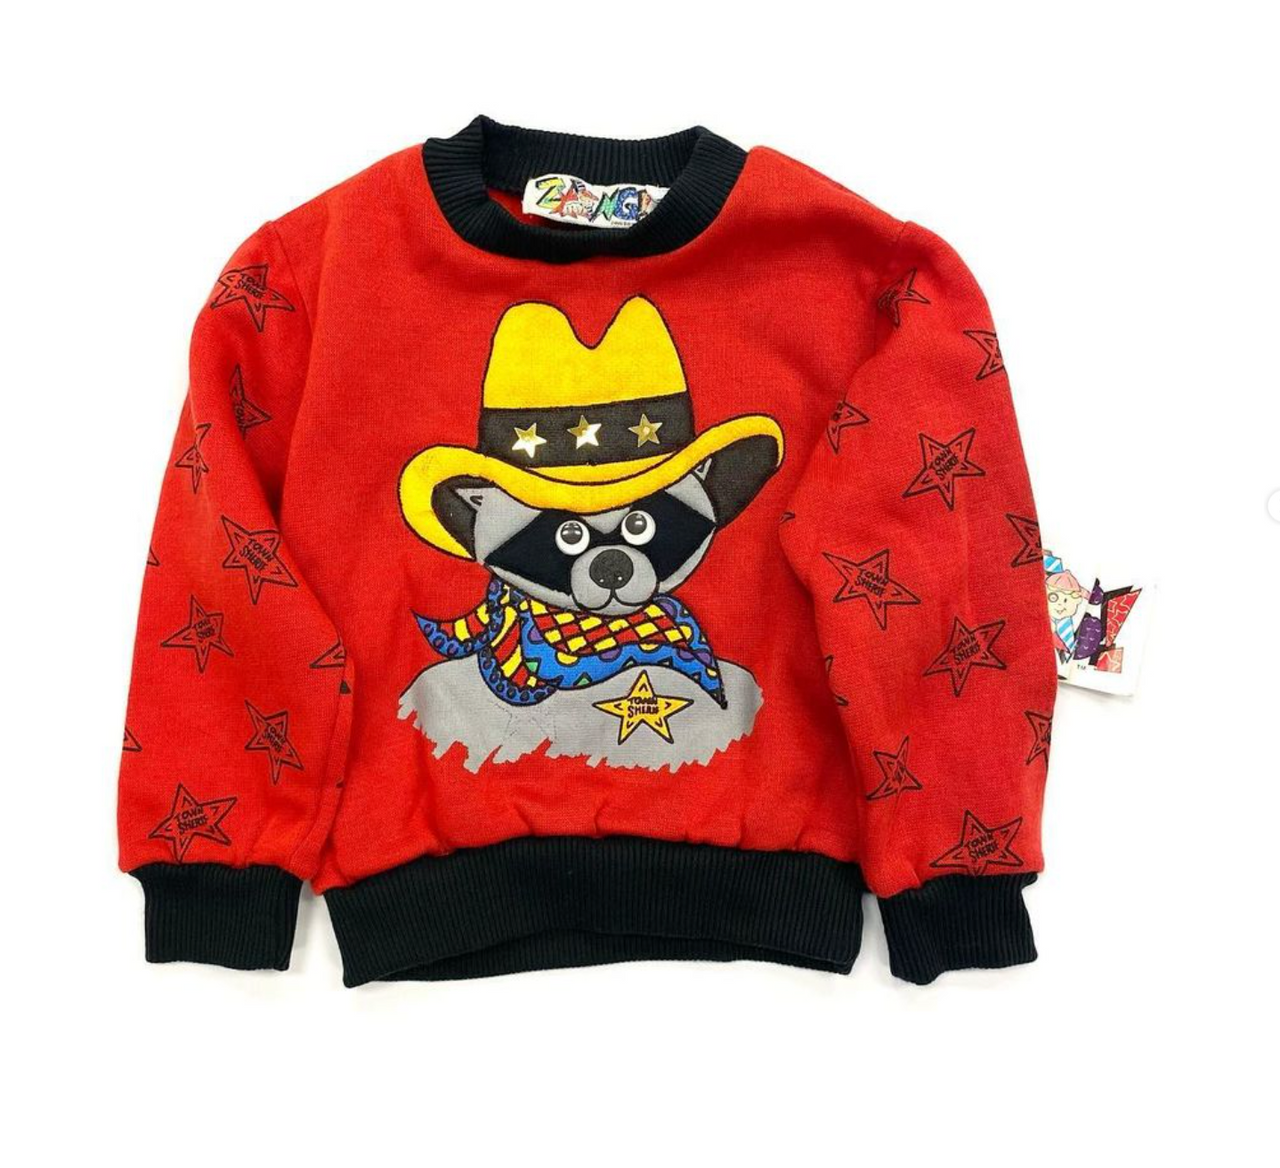 Apple Vintage - Apparel - ZING Raccoon Sweater